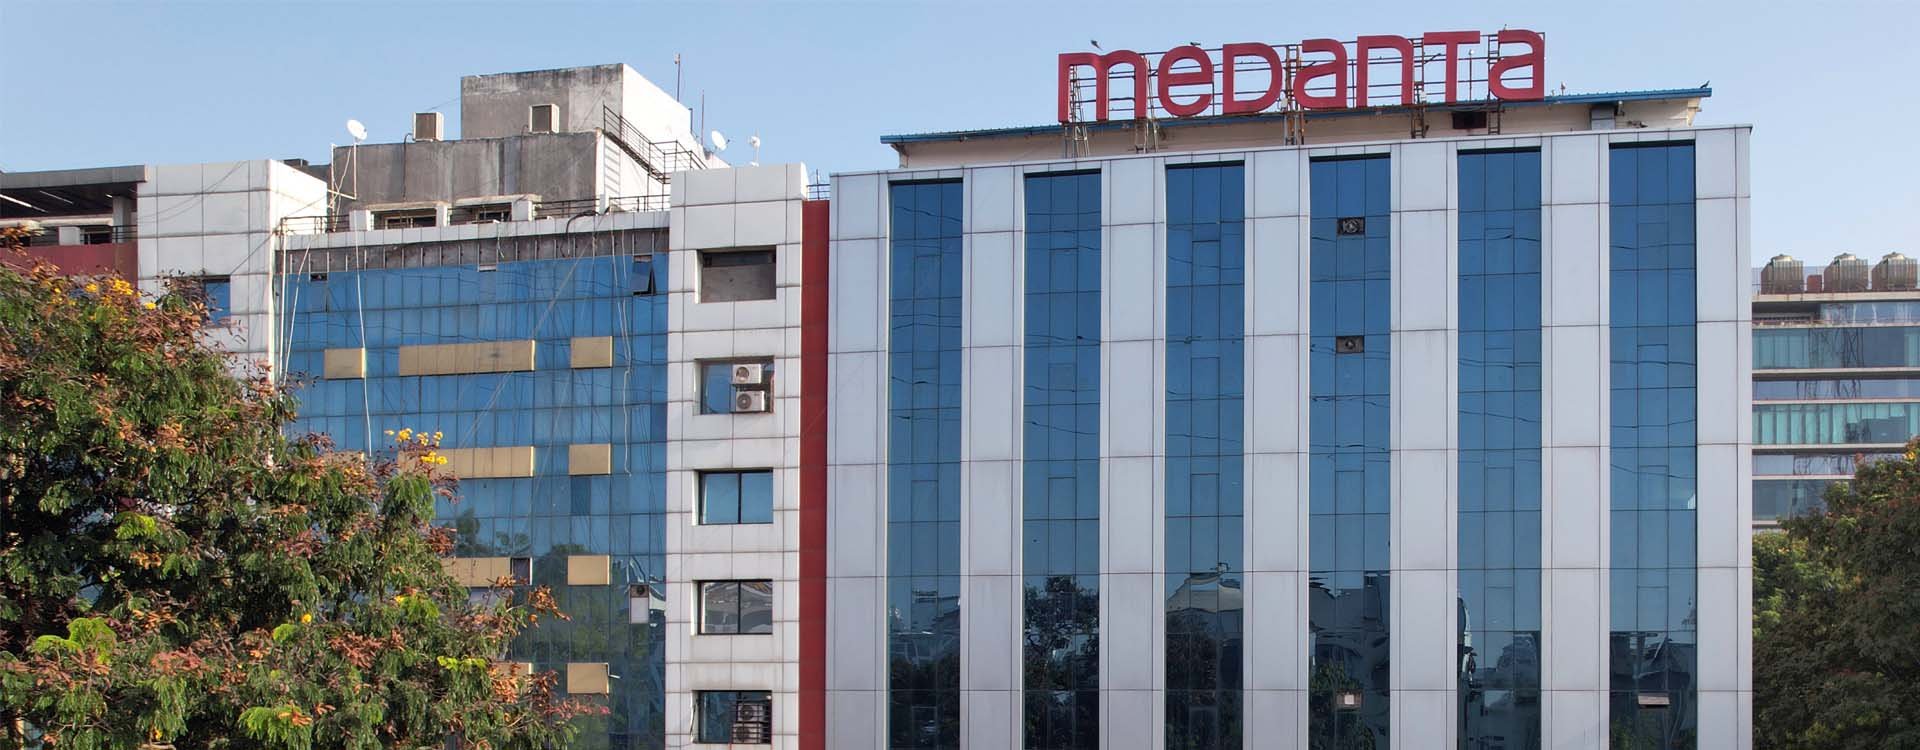 Medanta Hospital Gurgaon's Images